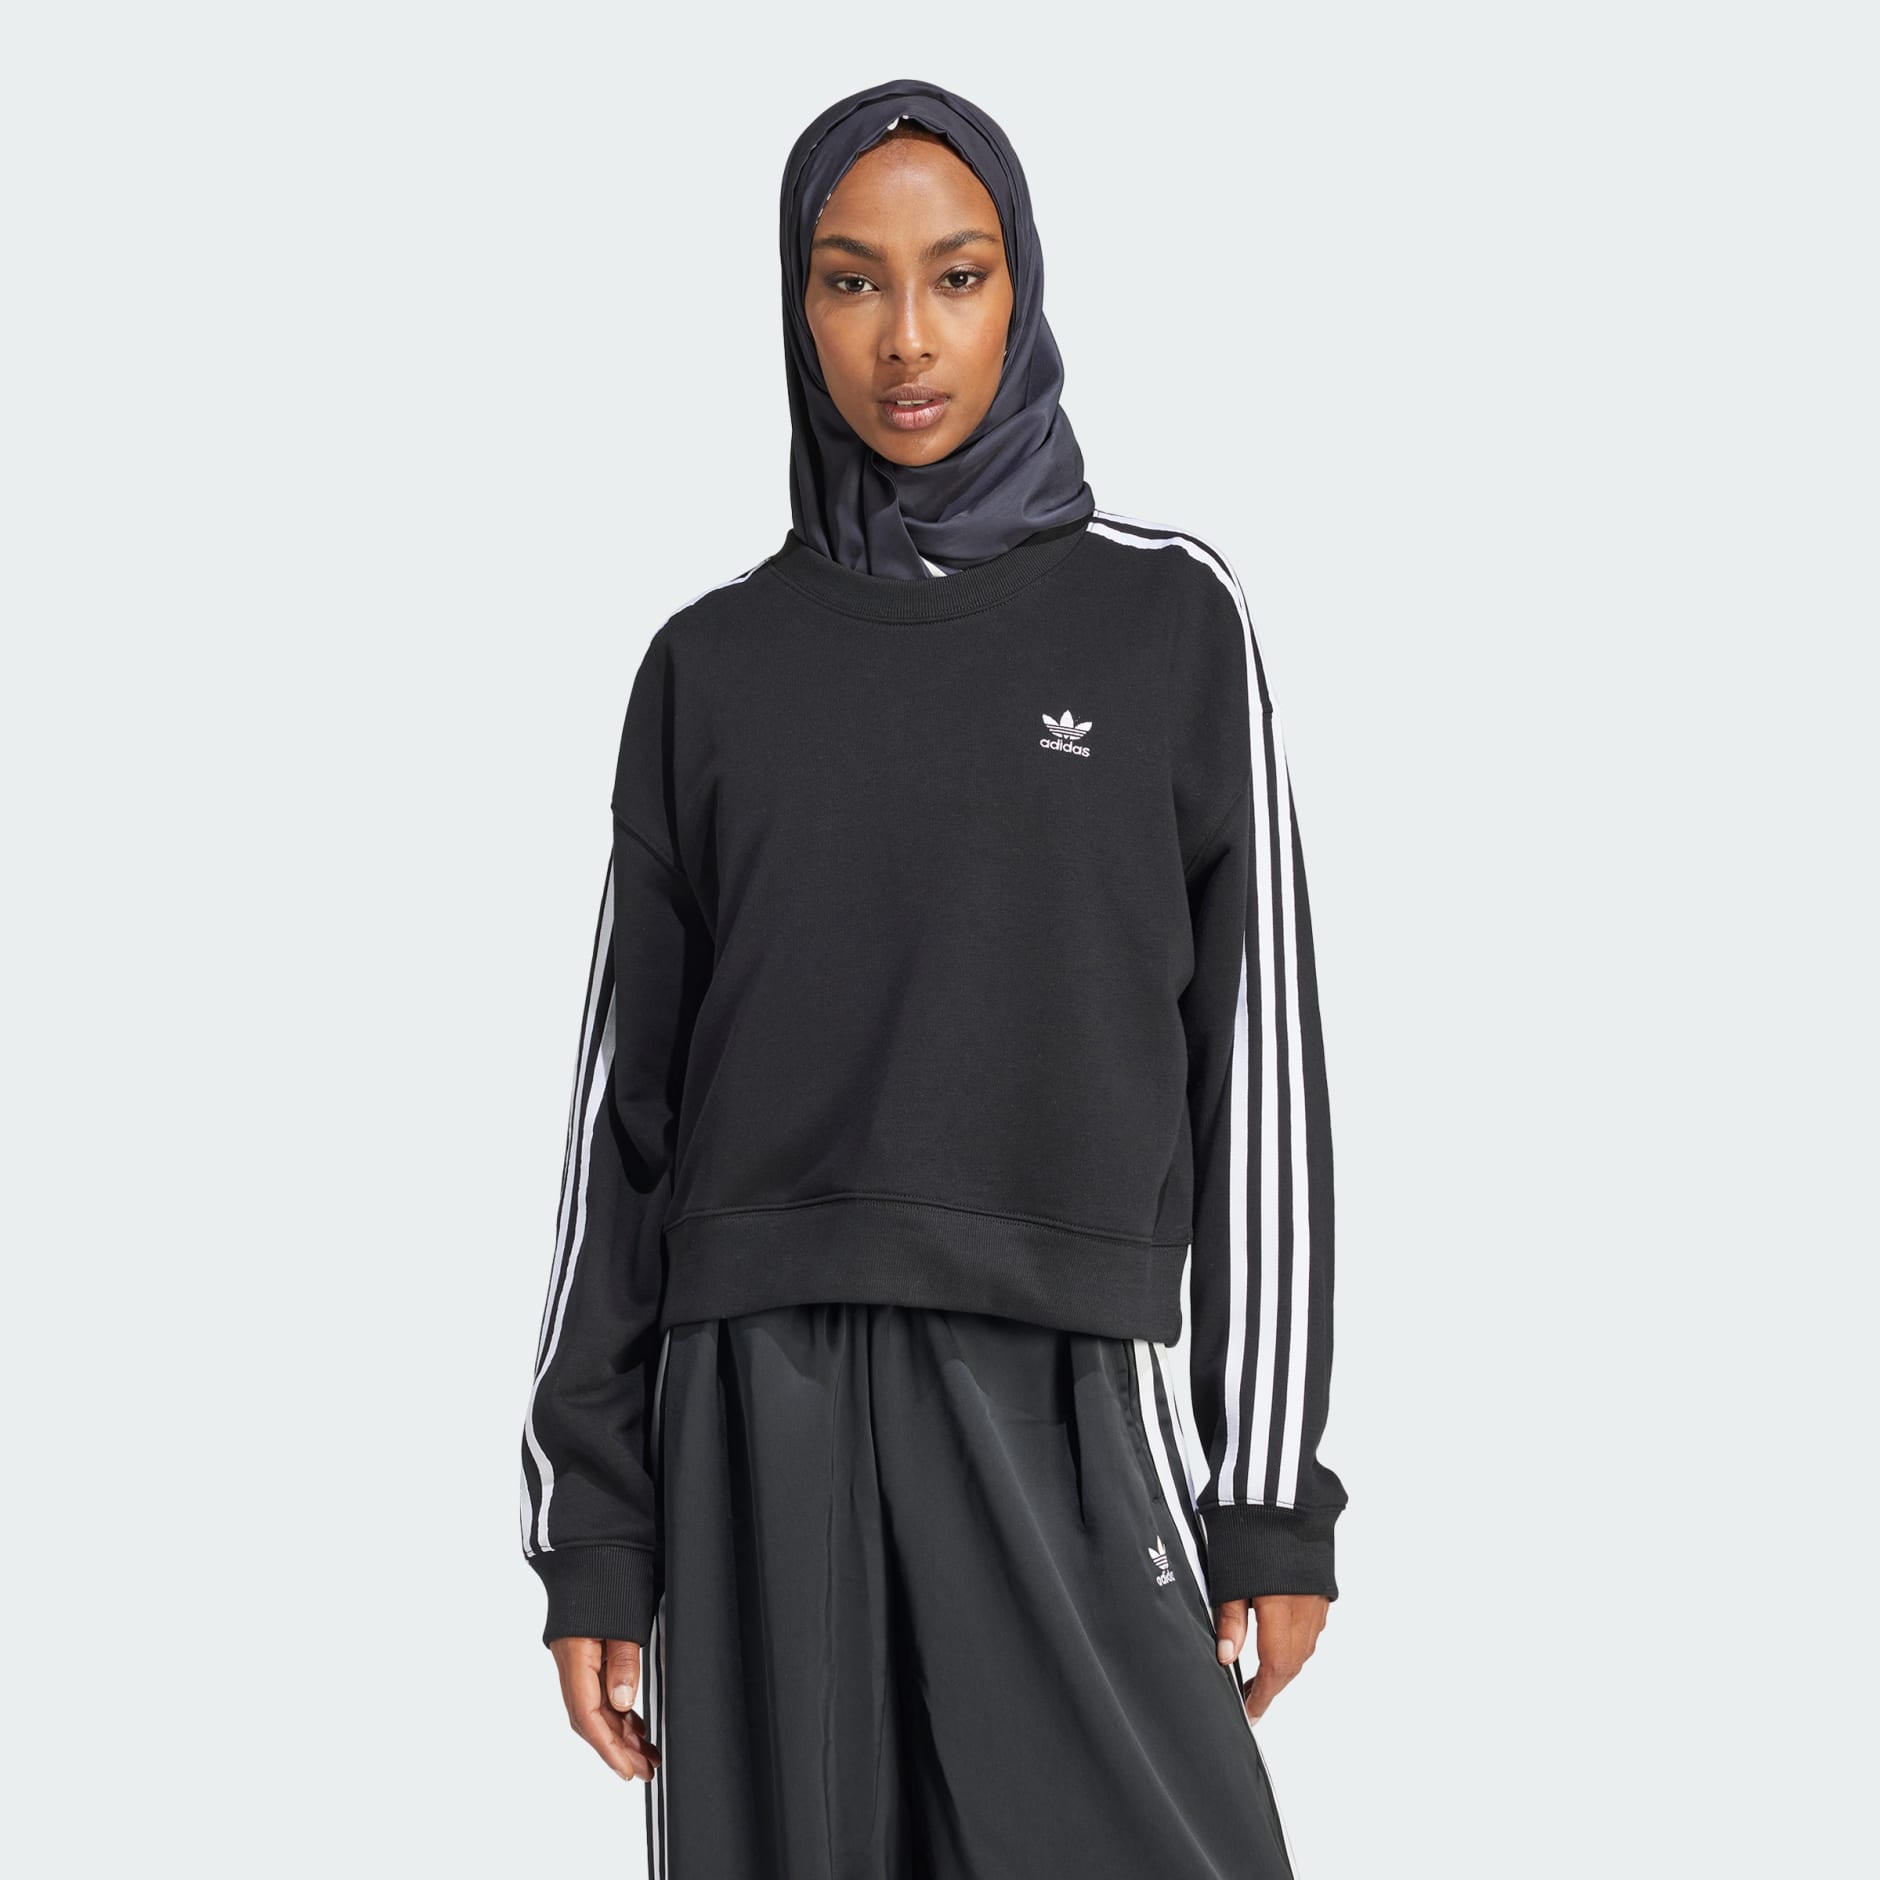 Women's Clothing - 3-Stripes Crew Sweatshirt - Black | adidas Saudi Arabia